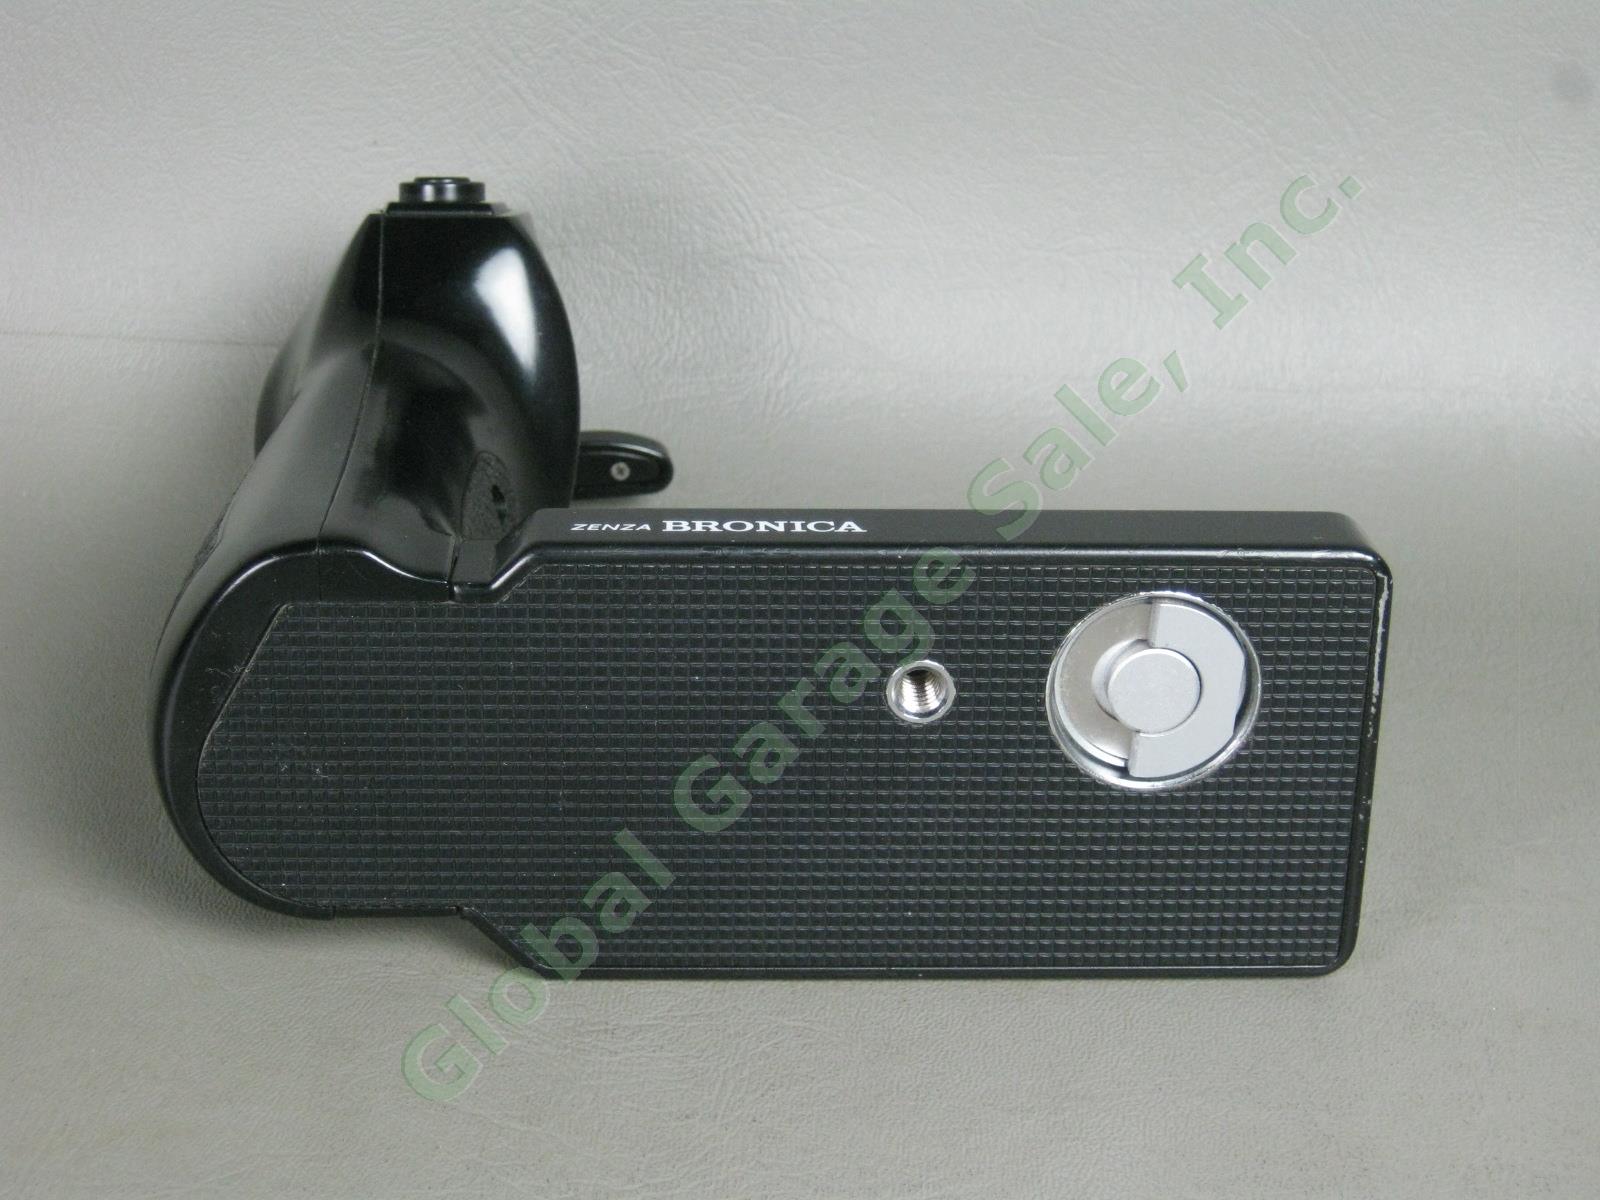 Bronica GS-1 6x7 Medium Format Camera Zenzanon-PG 100mm Lens Backs Grip Bundle 23